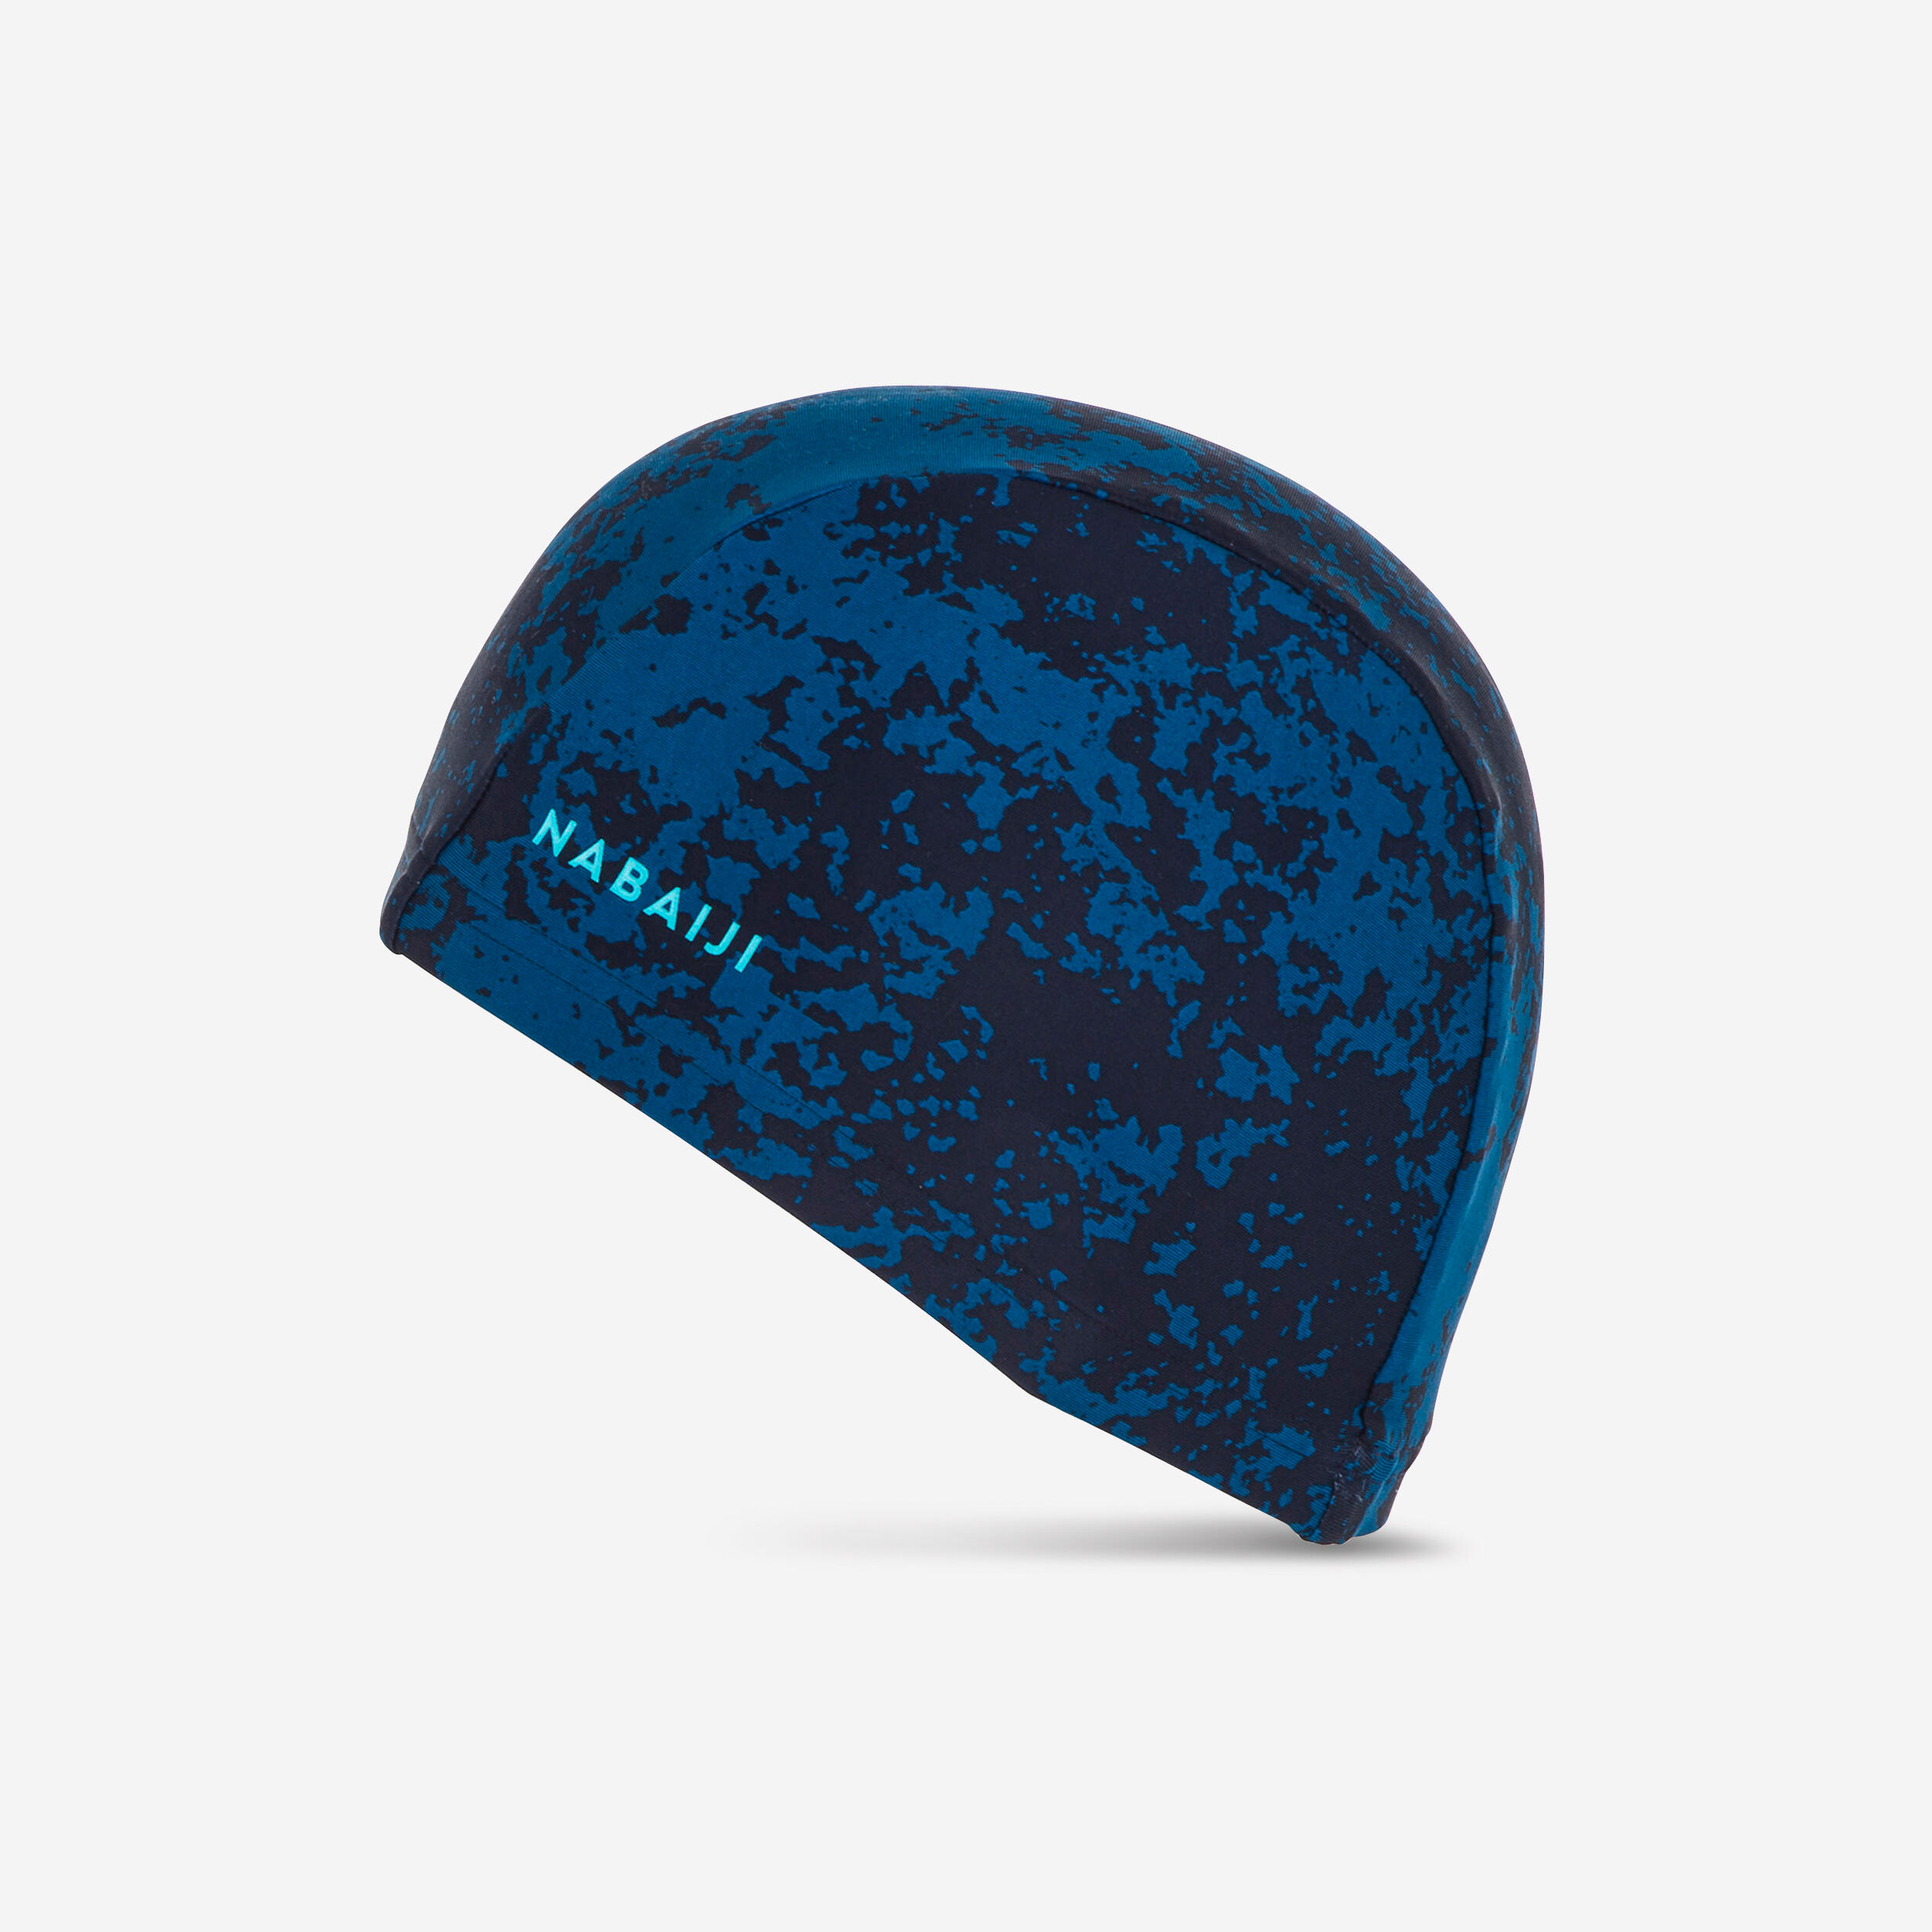 Mesh swim cap - Printed fabric - Hide black blue 1/3